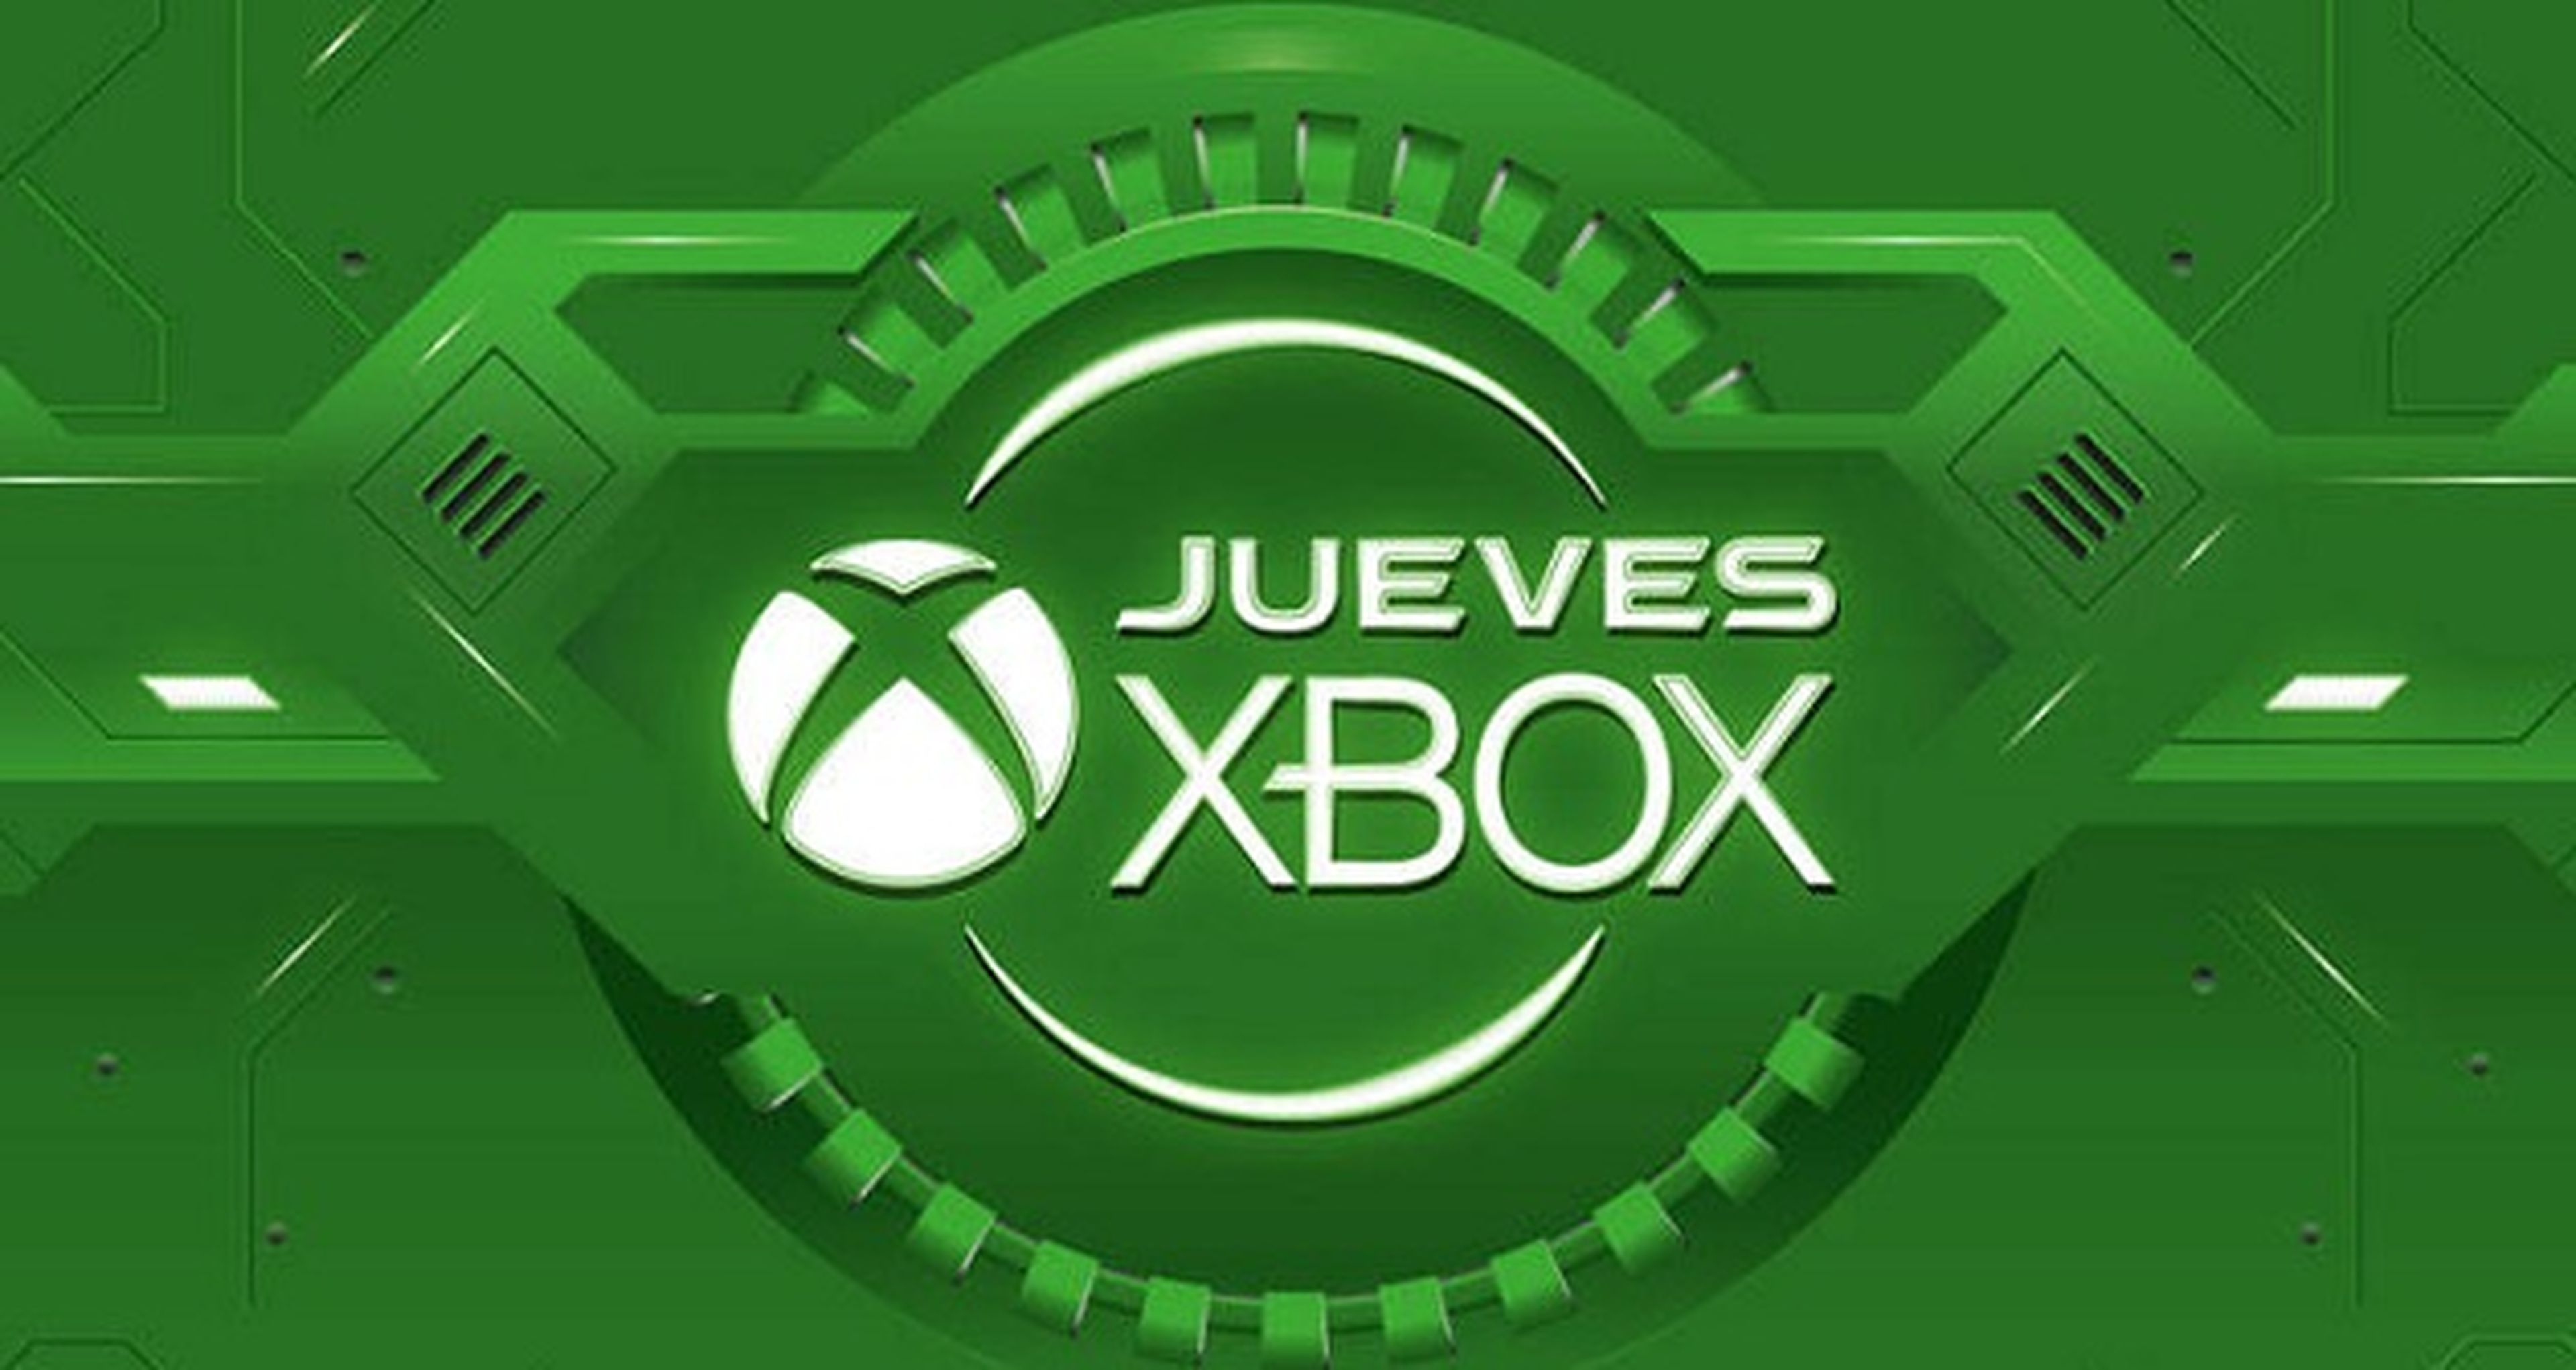 Jueves Xbox en GAME: quinta semana de ofertas